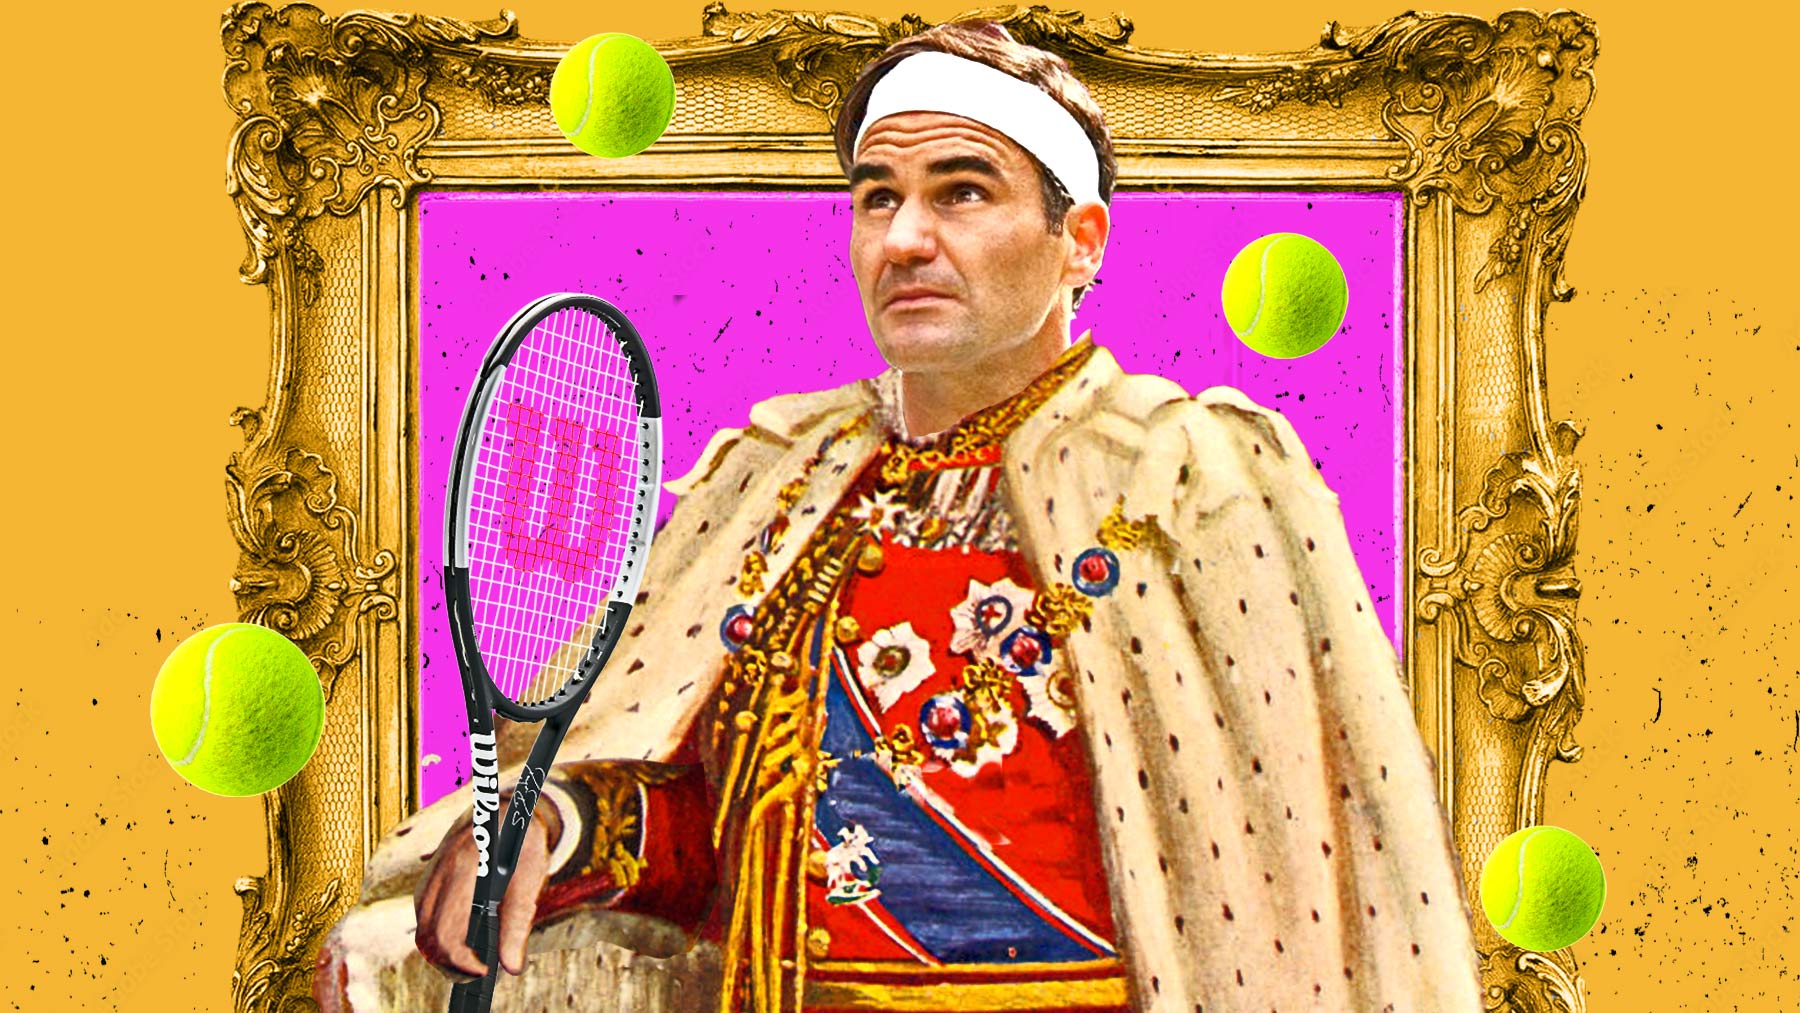 Dios salve al rey Federer